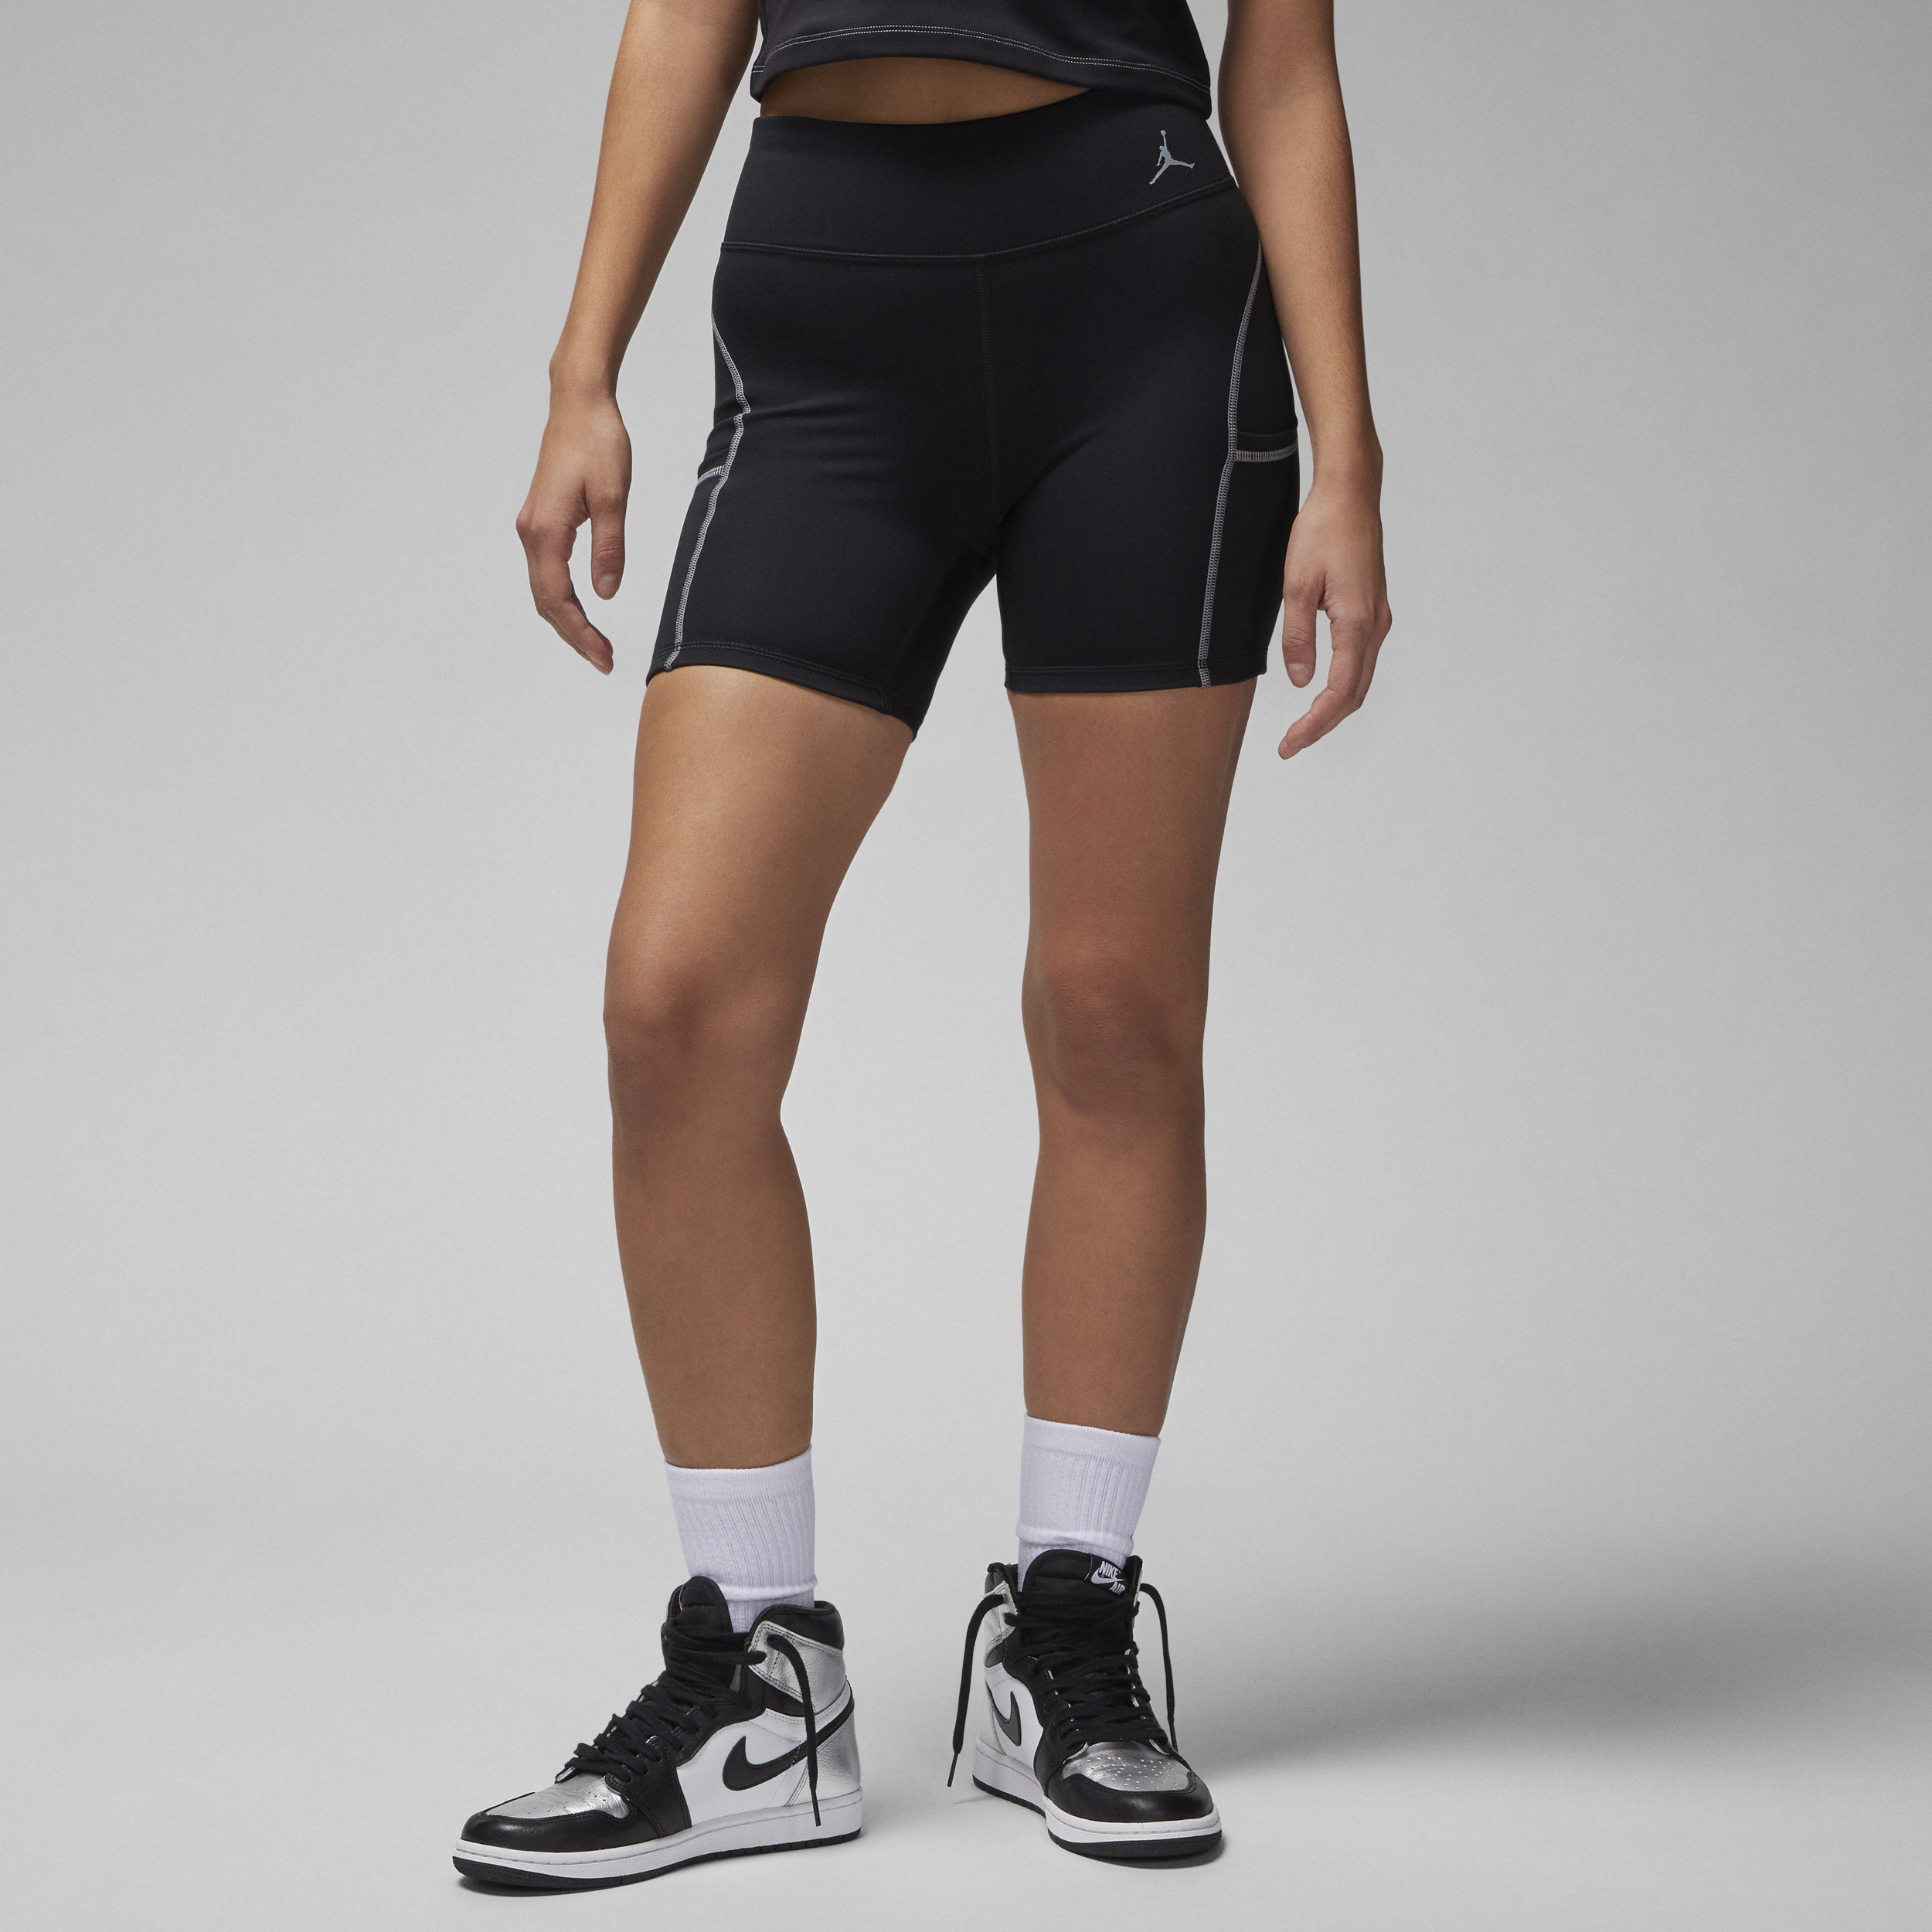 Jordan Sport Pantalón corto - Mujer - Negro